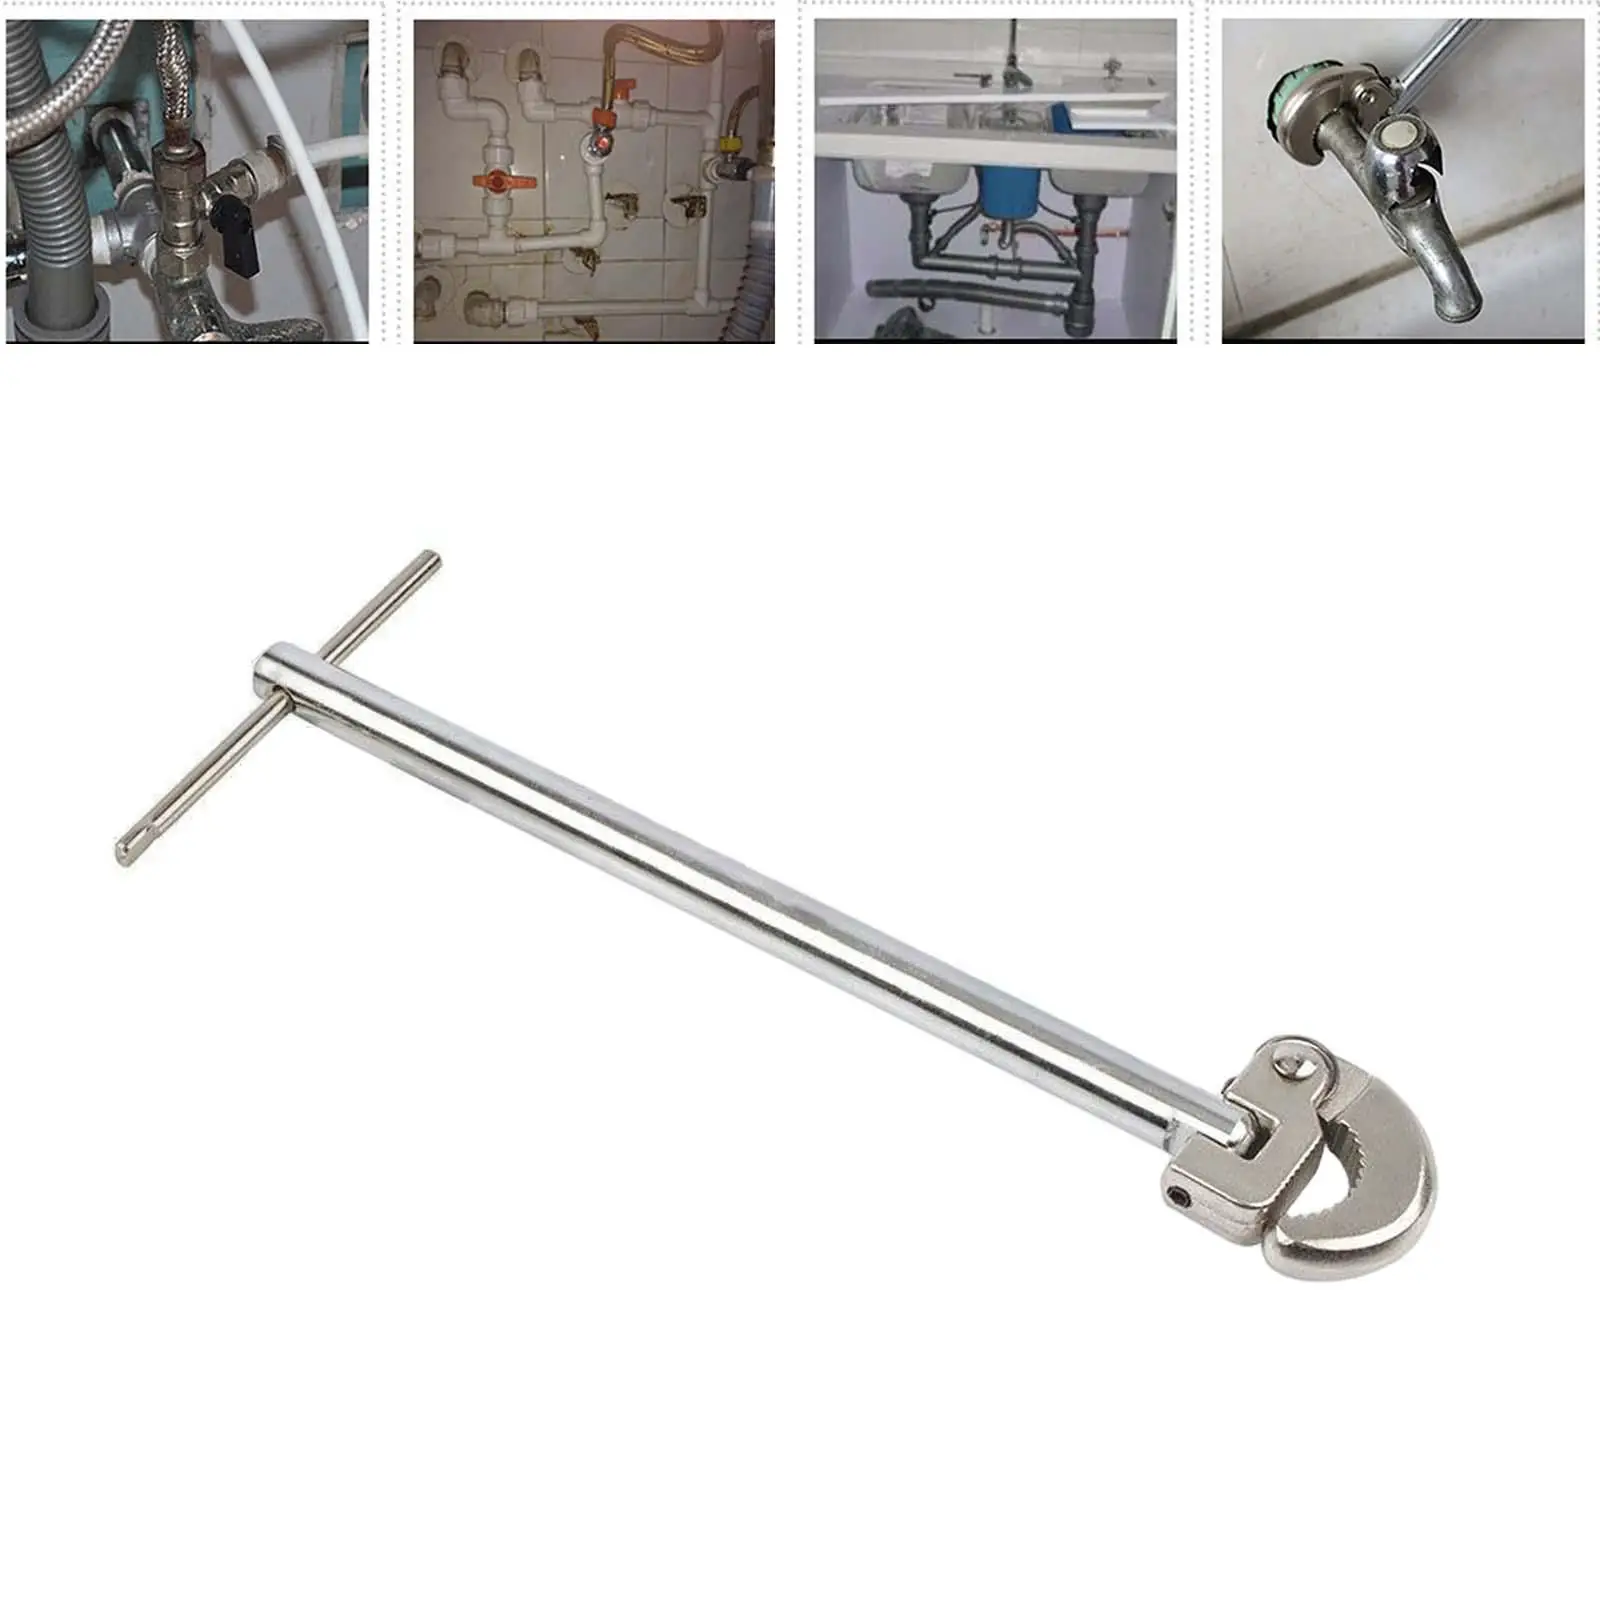 Basin Spanner Retractable Telescoping Basin Wrench for Garden Yard Bathroom Plumber